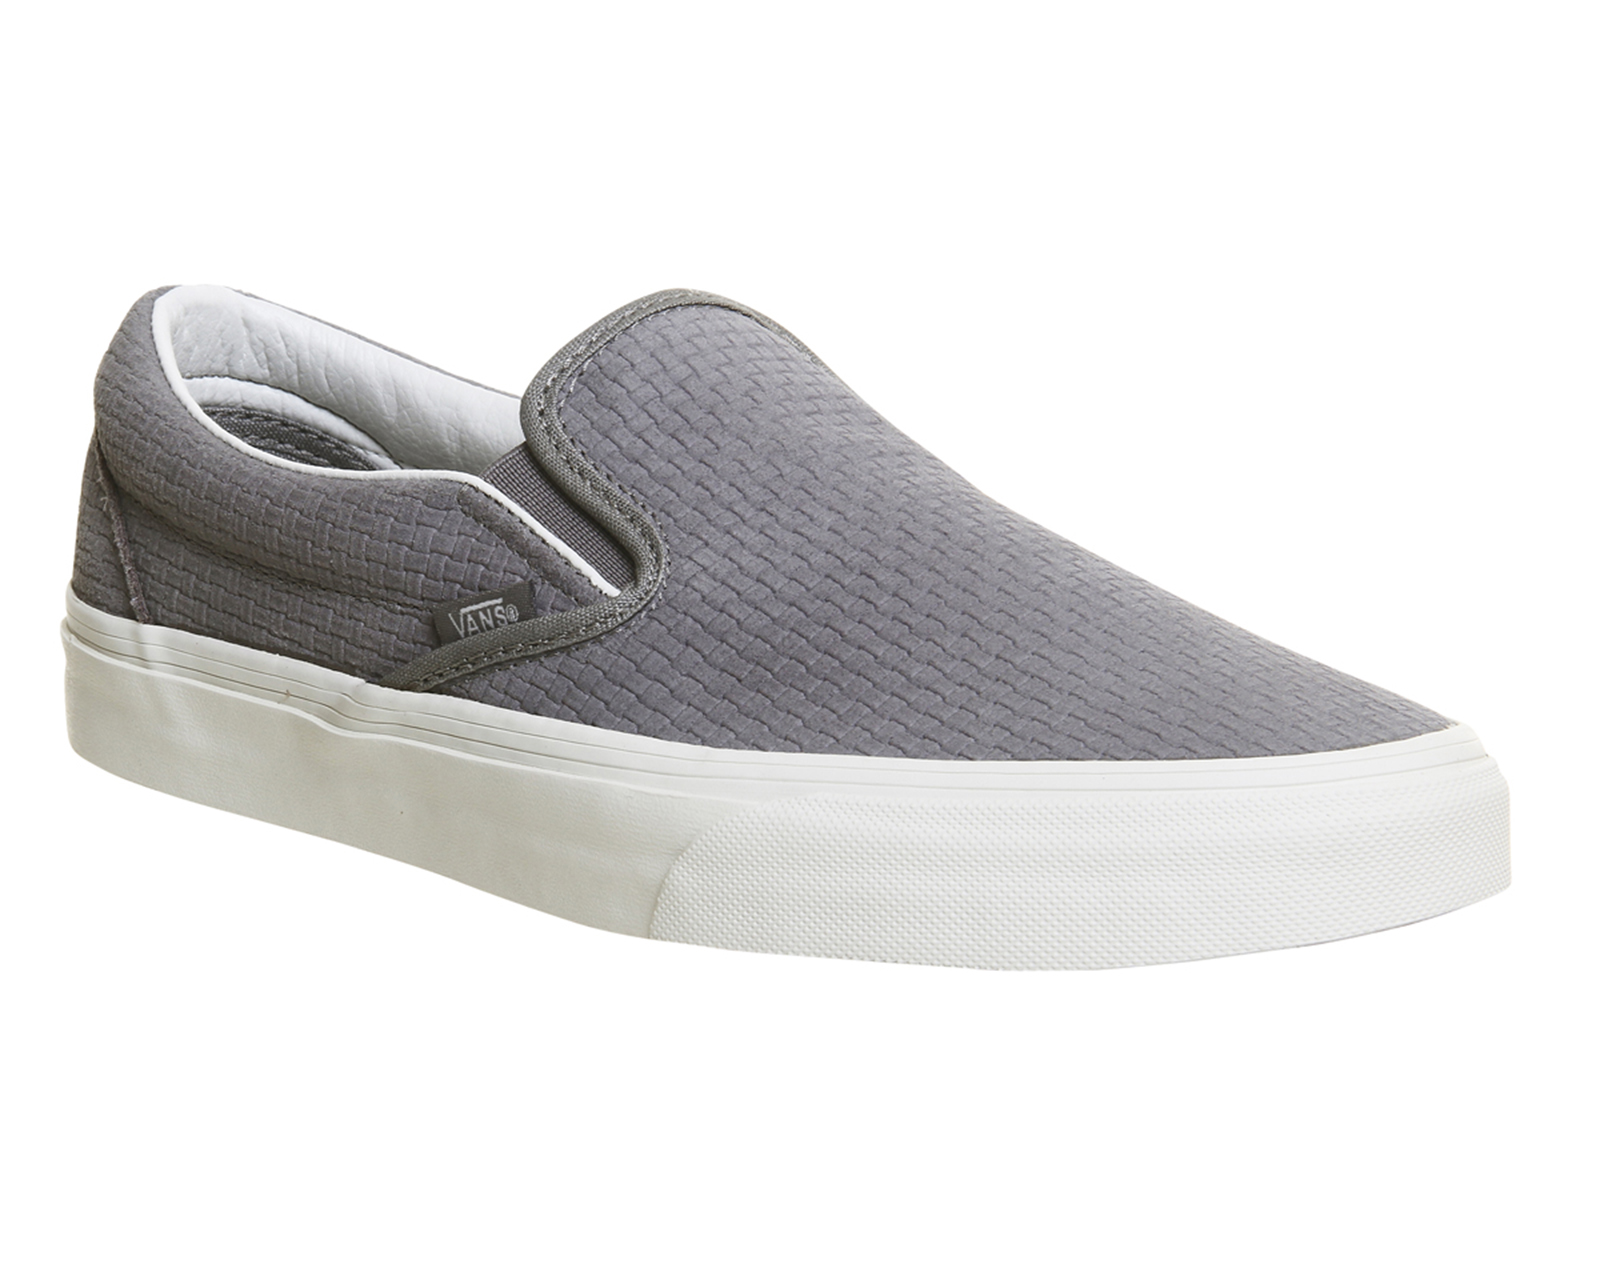 vans classic slip on grey suede trainers